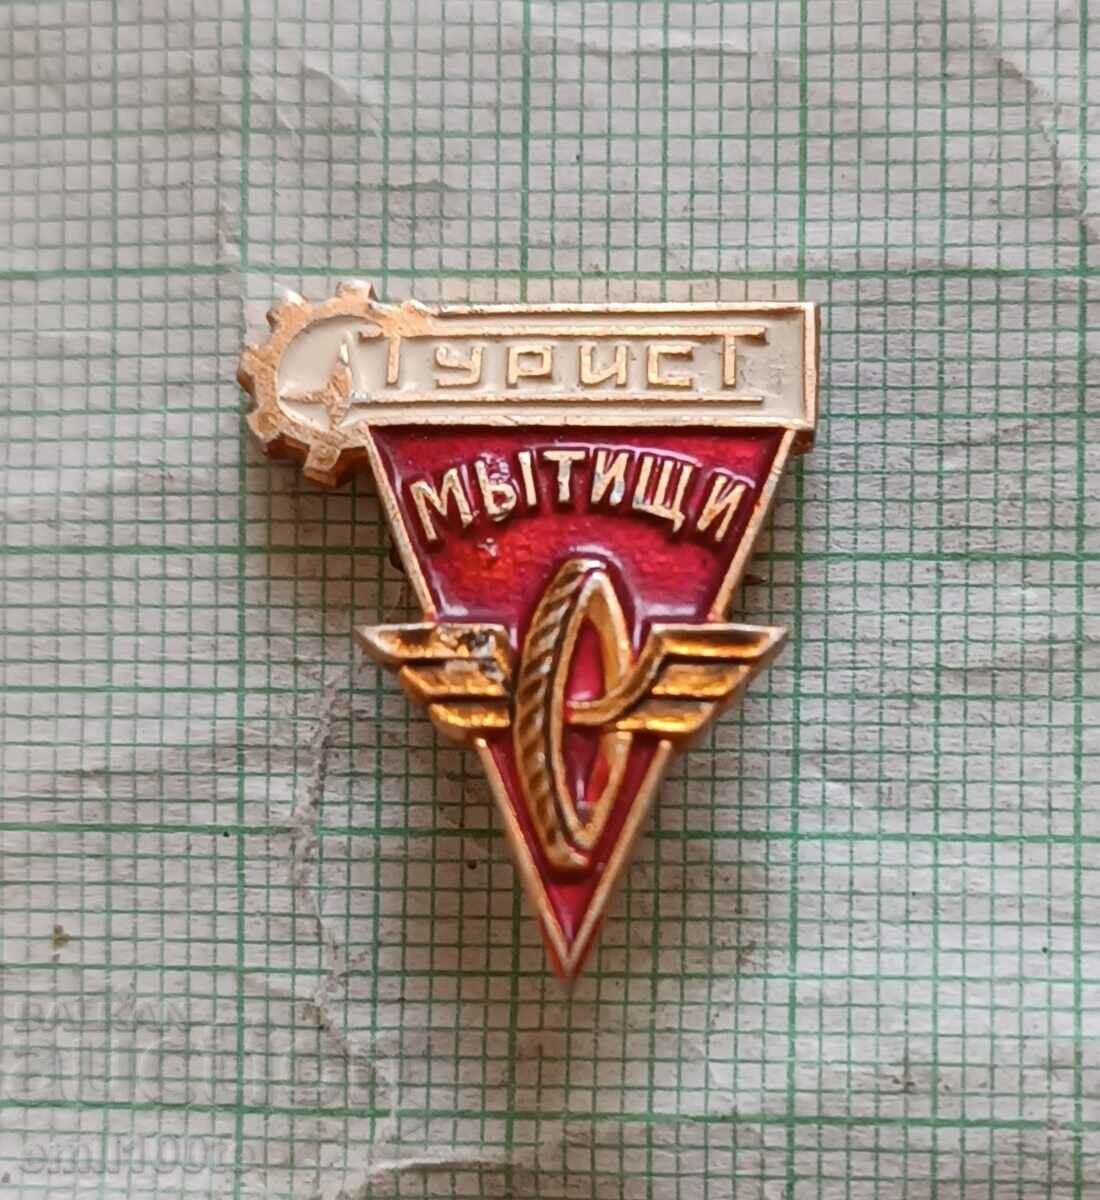 Badge - Tourist city of Mytishti USSR